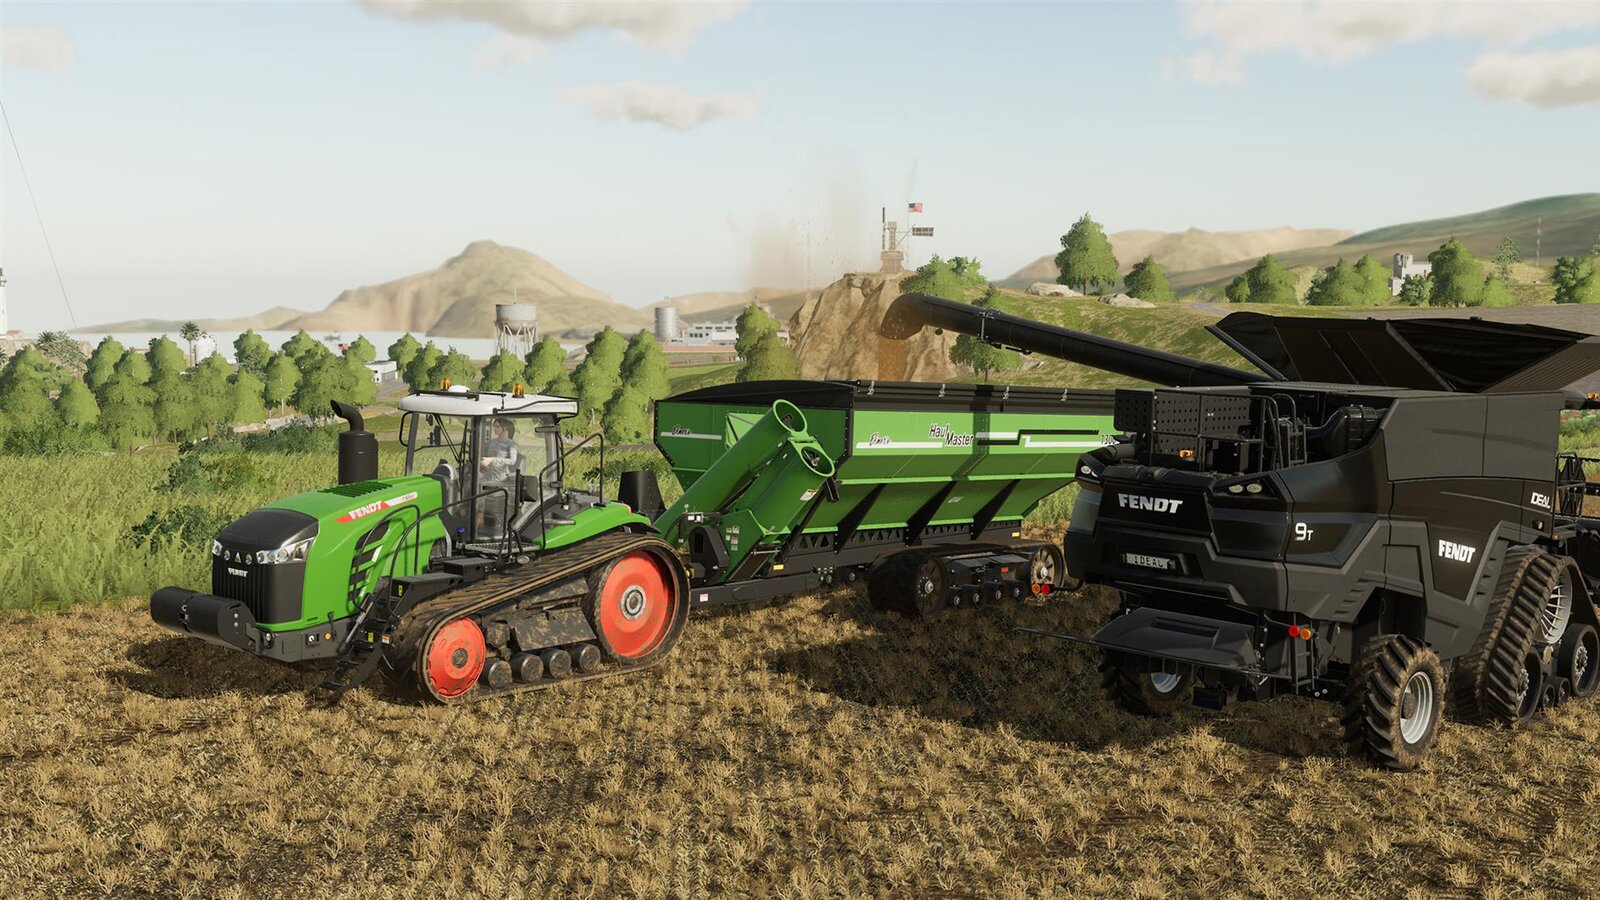 Farming Simulator 19 - Season Pass